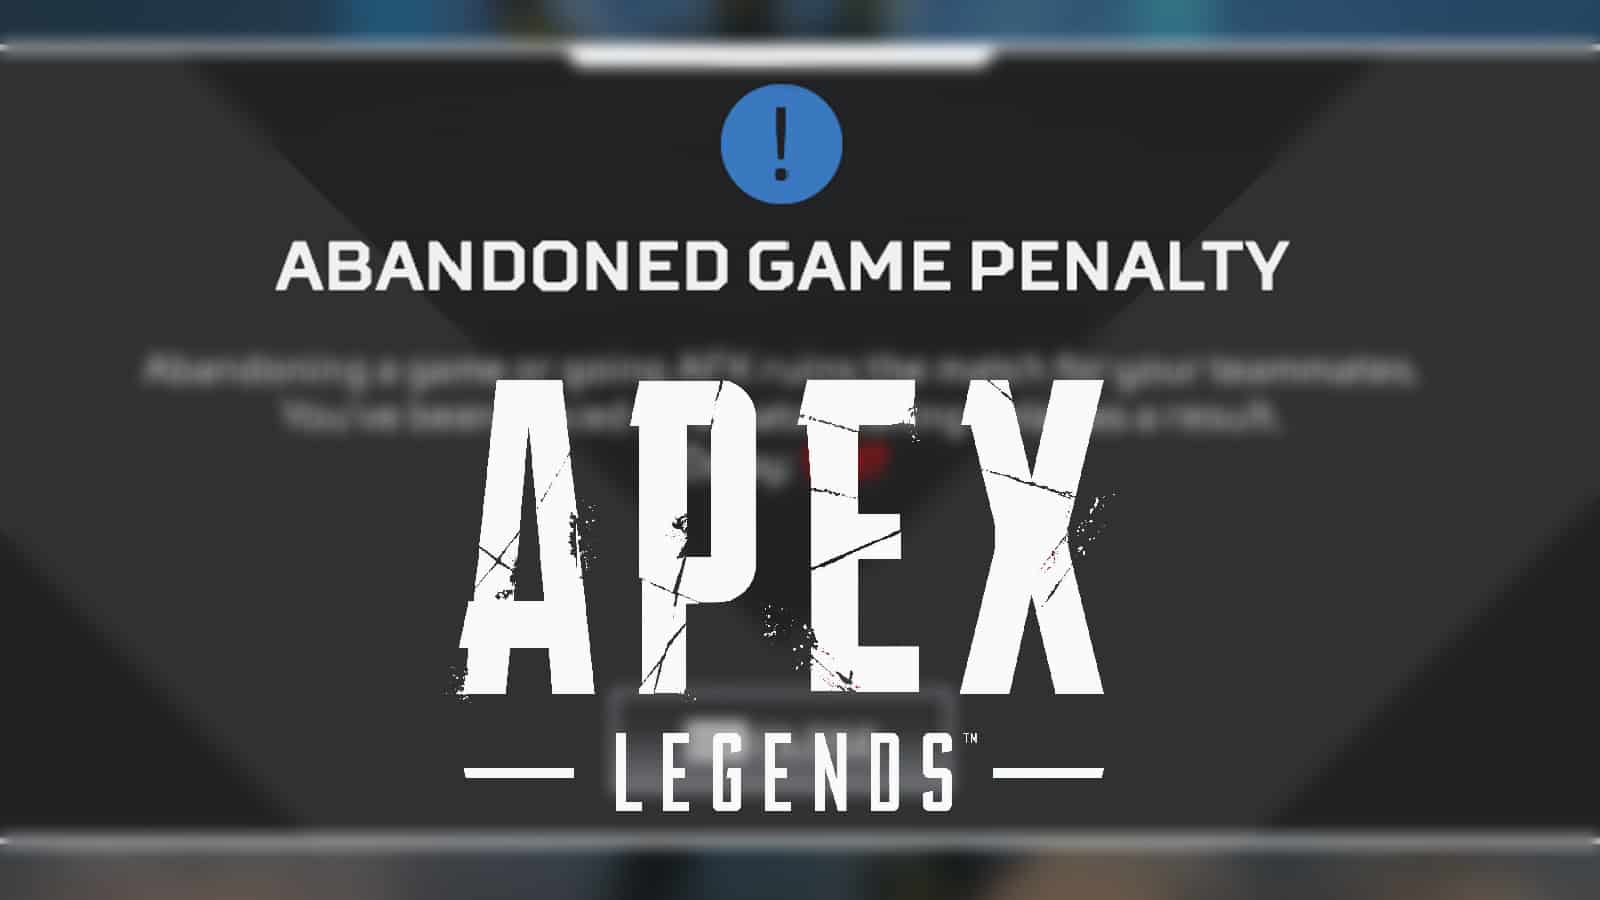 Apex Legends leaver penalty